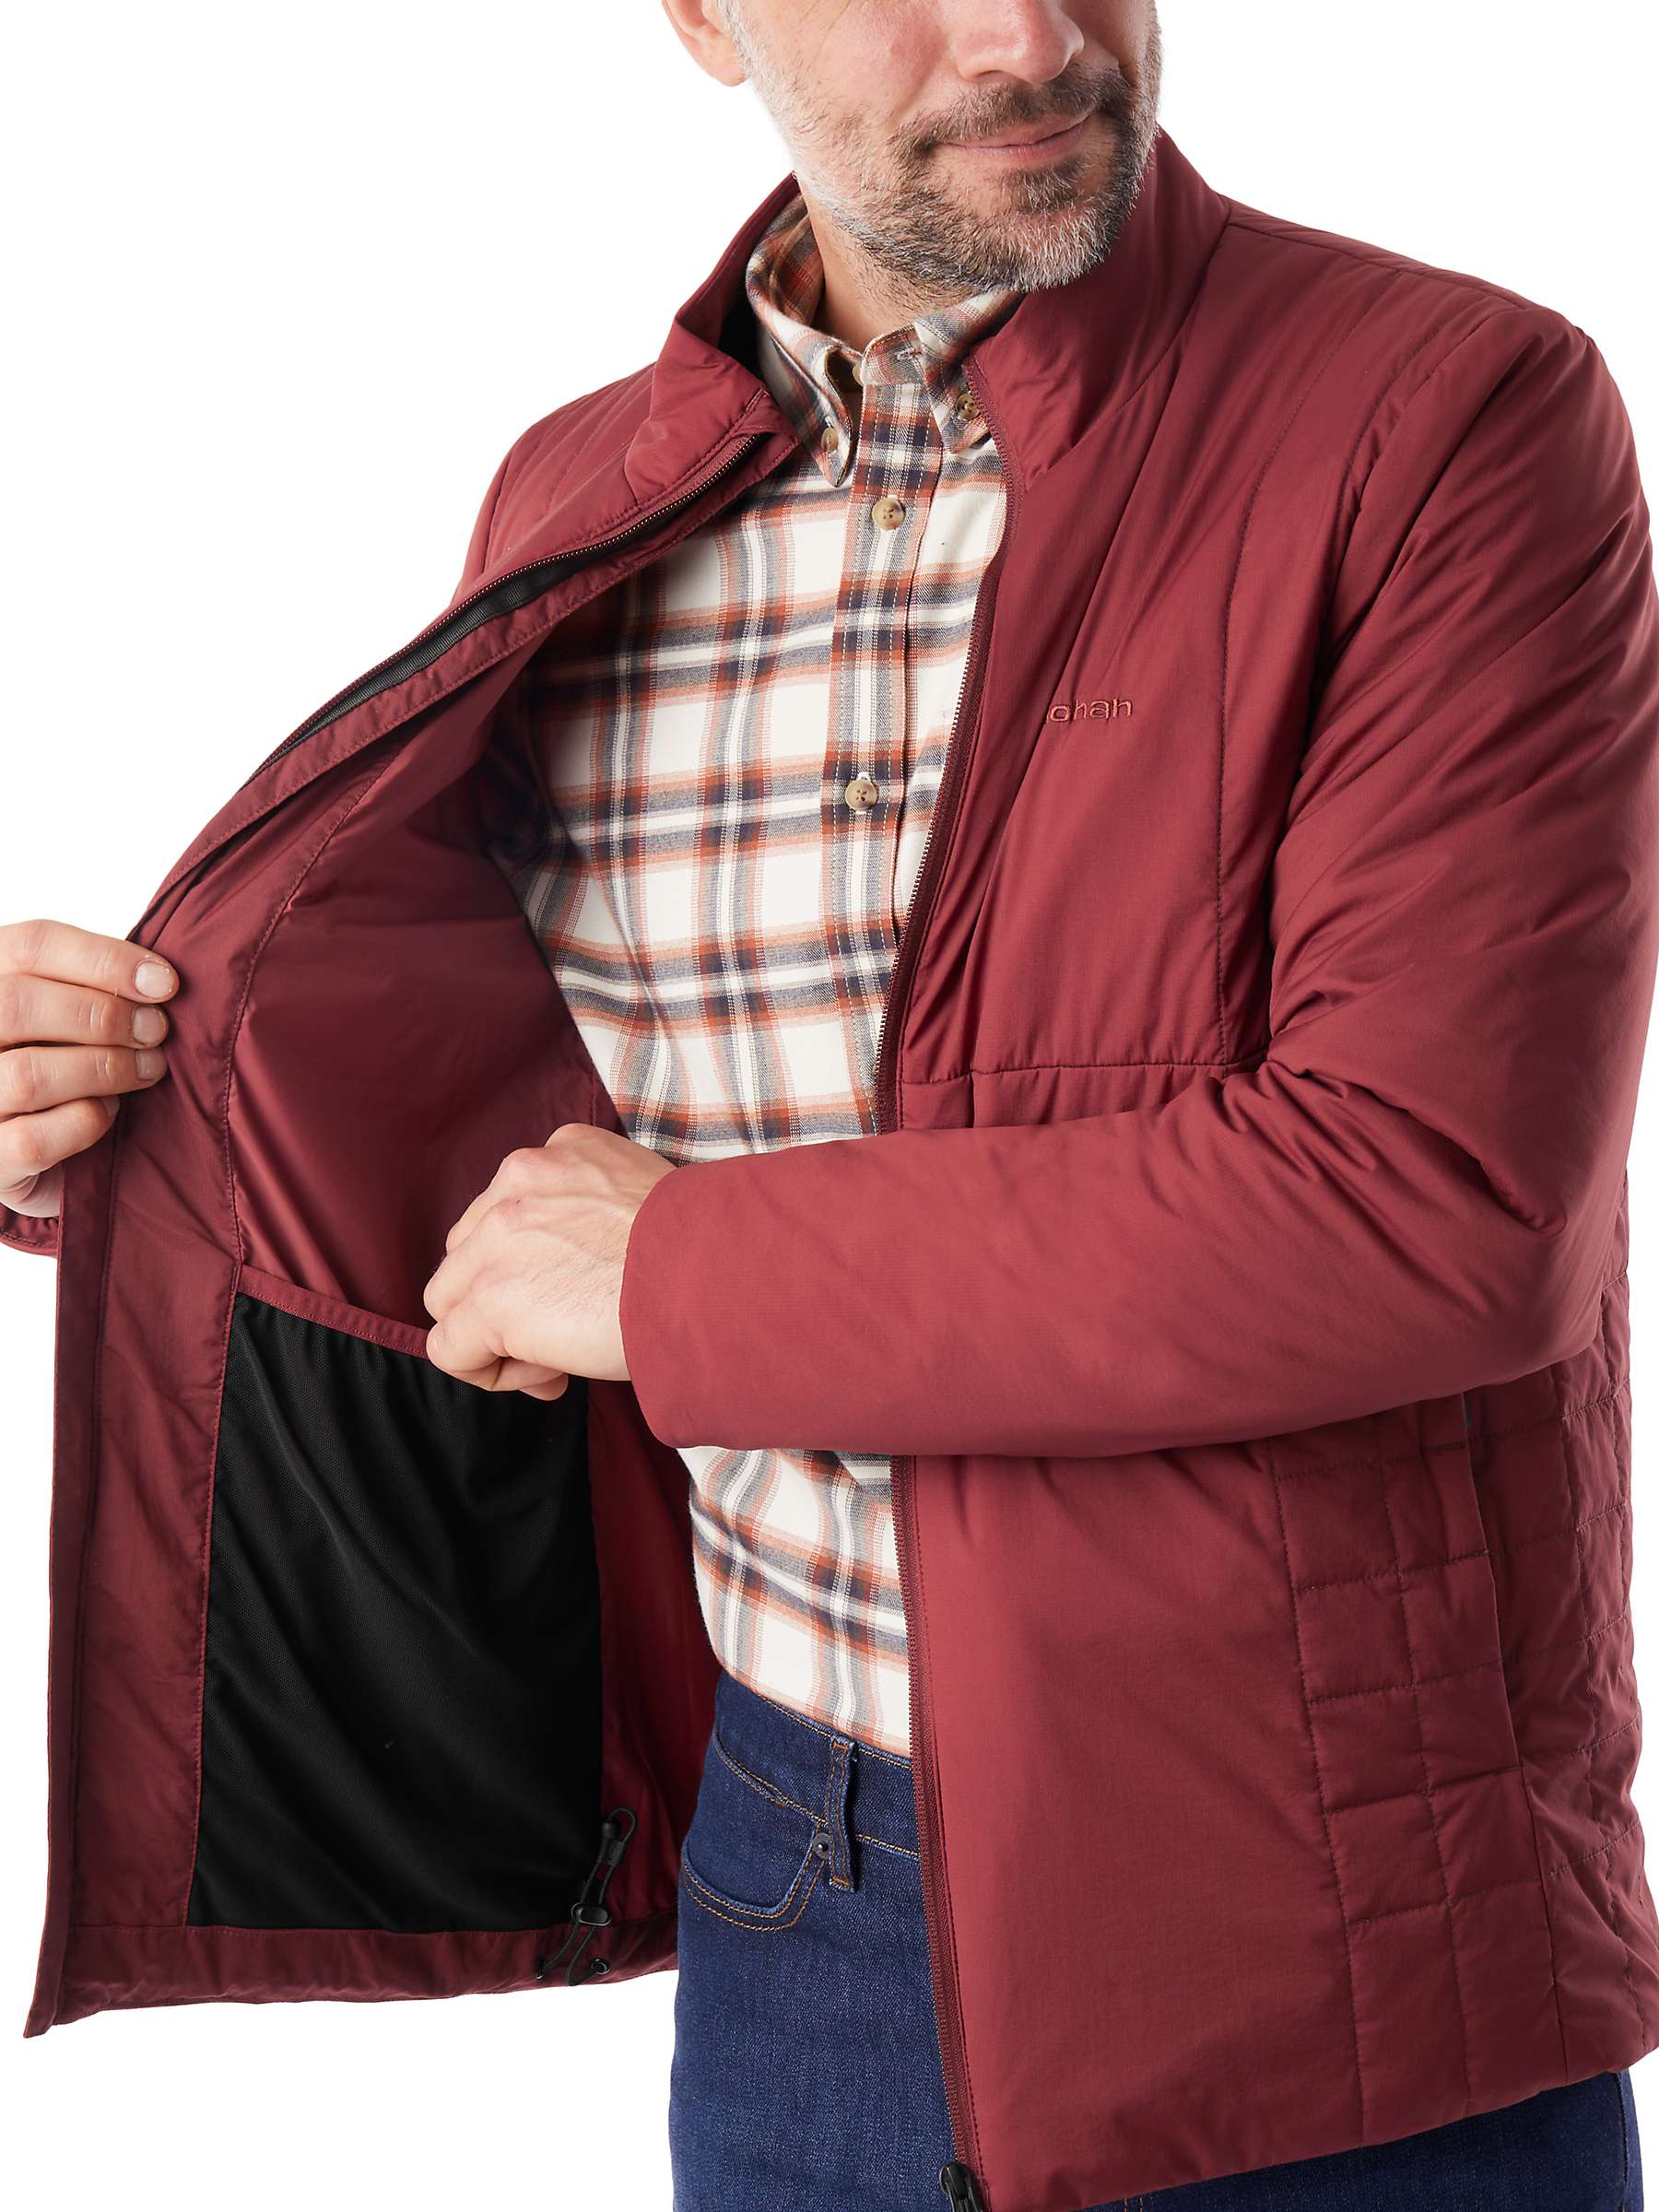 Buy Rohan Rime Men's Insulated Jacket Online at johnlewis.com